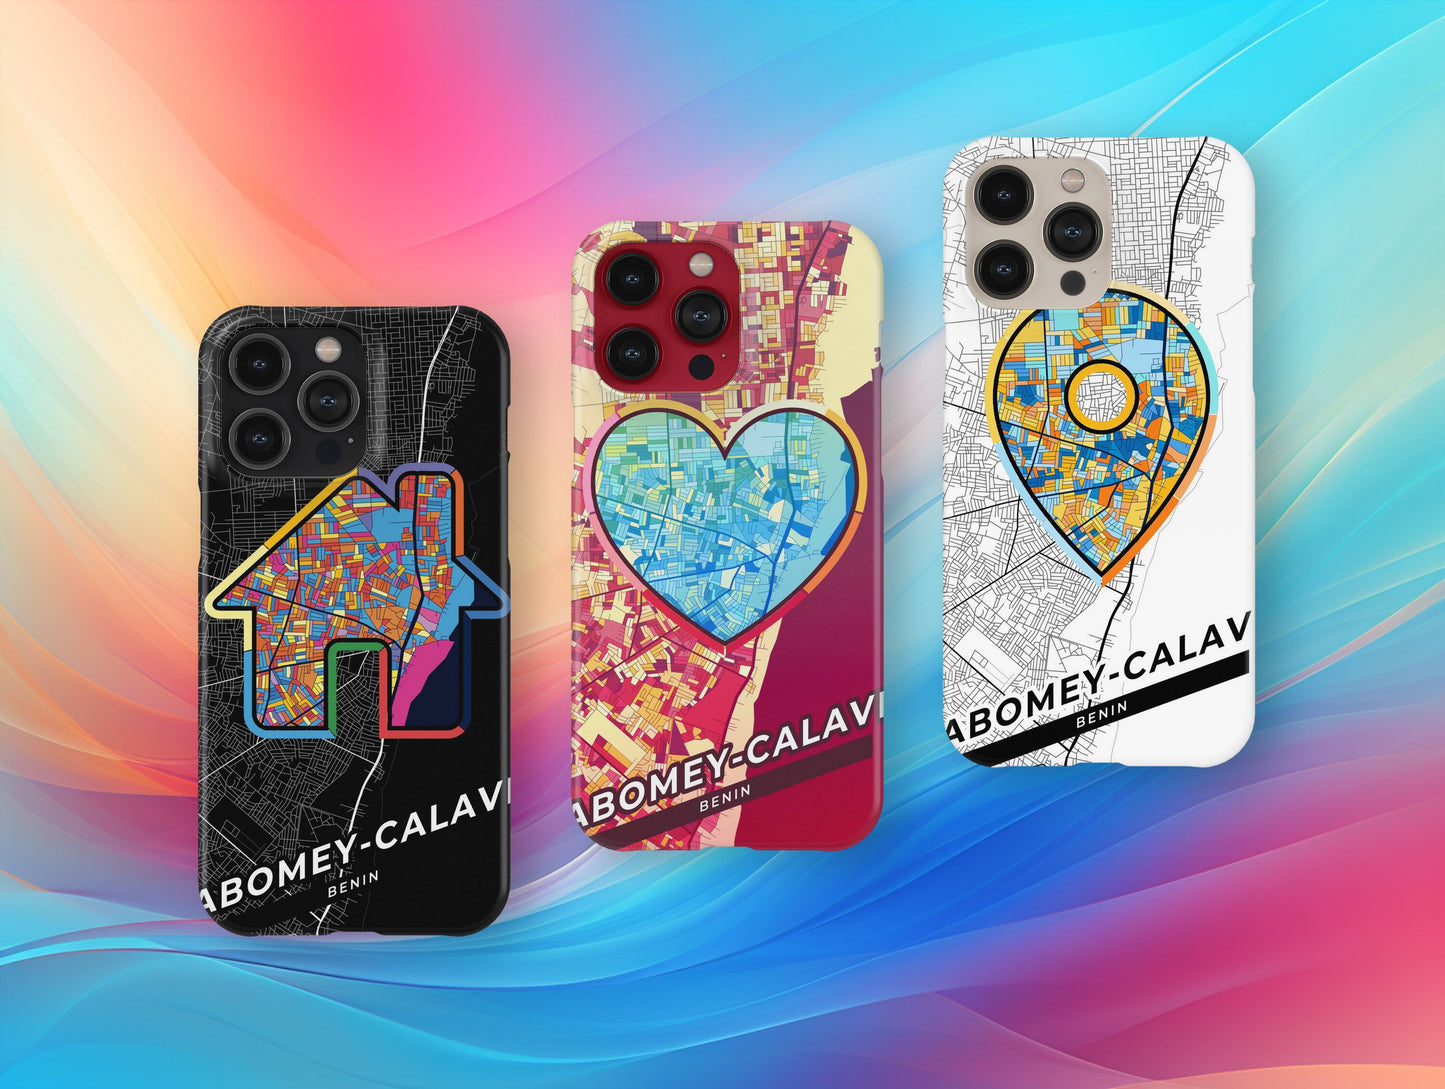 Abomey-Calavi Benin slim phone case with colorful icon. Birthday, wedding or housewarming gift. Couple match cases.